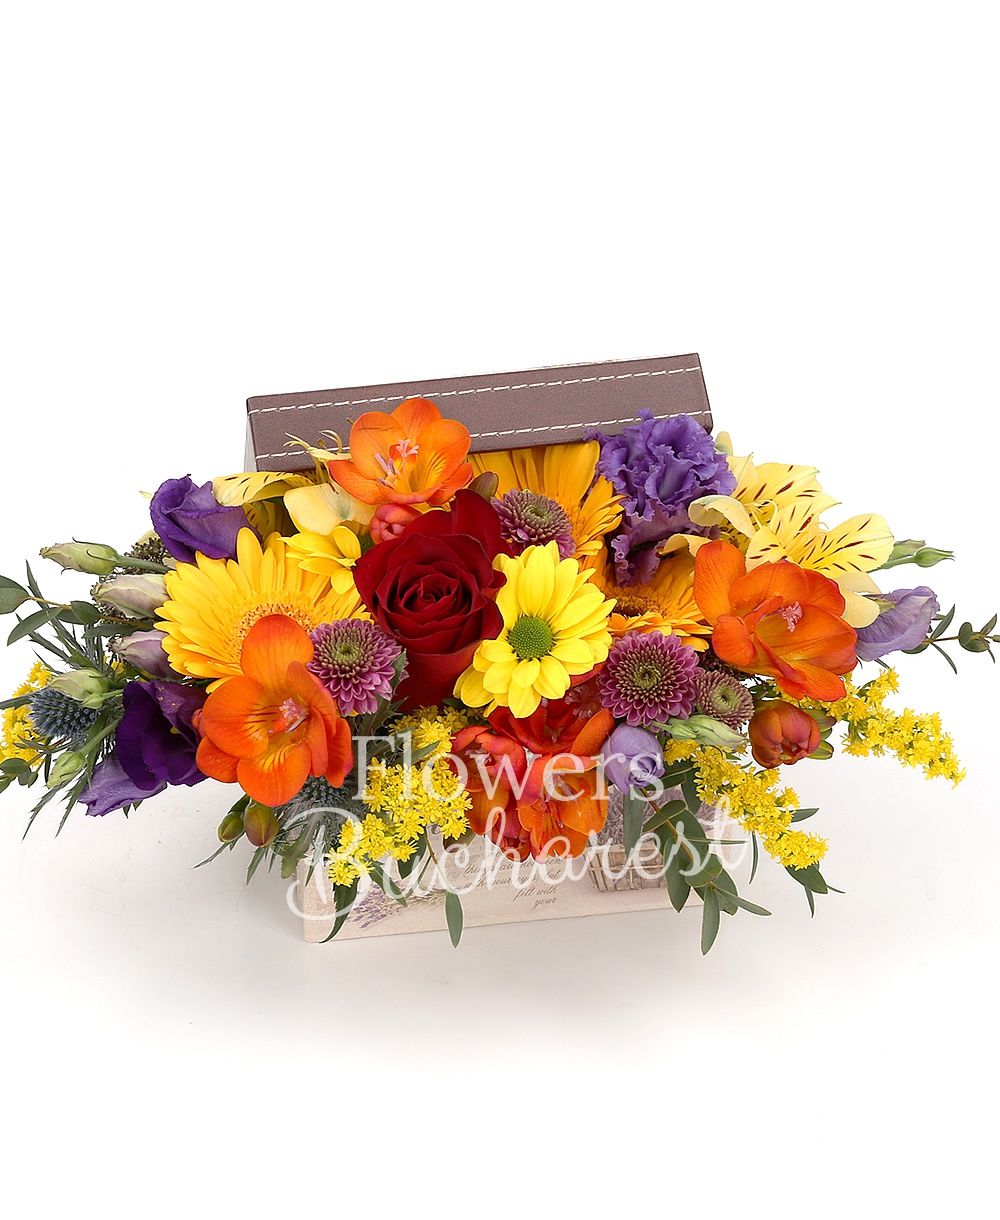 5 orange freesias, 5 yellow gerberas, purple lisianthus, yellow alstroemeria, purple chrysanthemum, solidago, eryngium, greenery